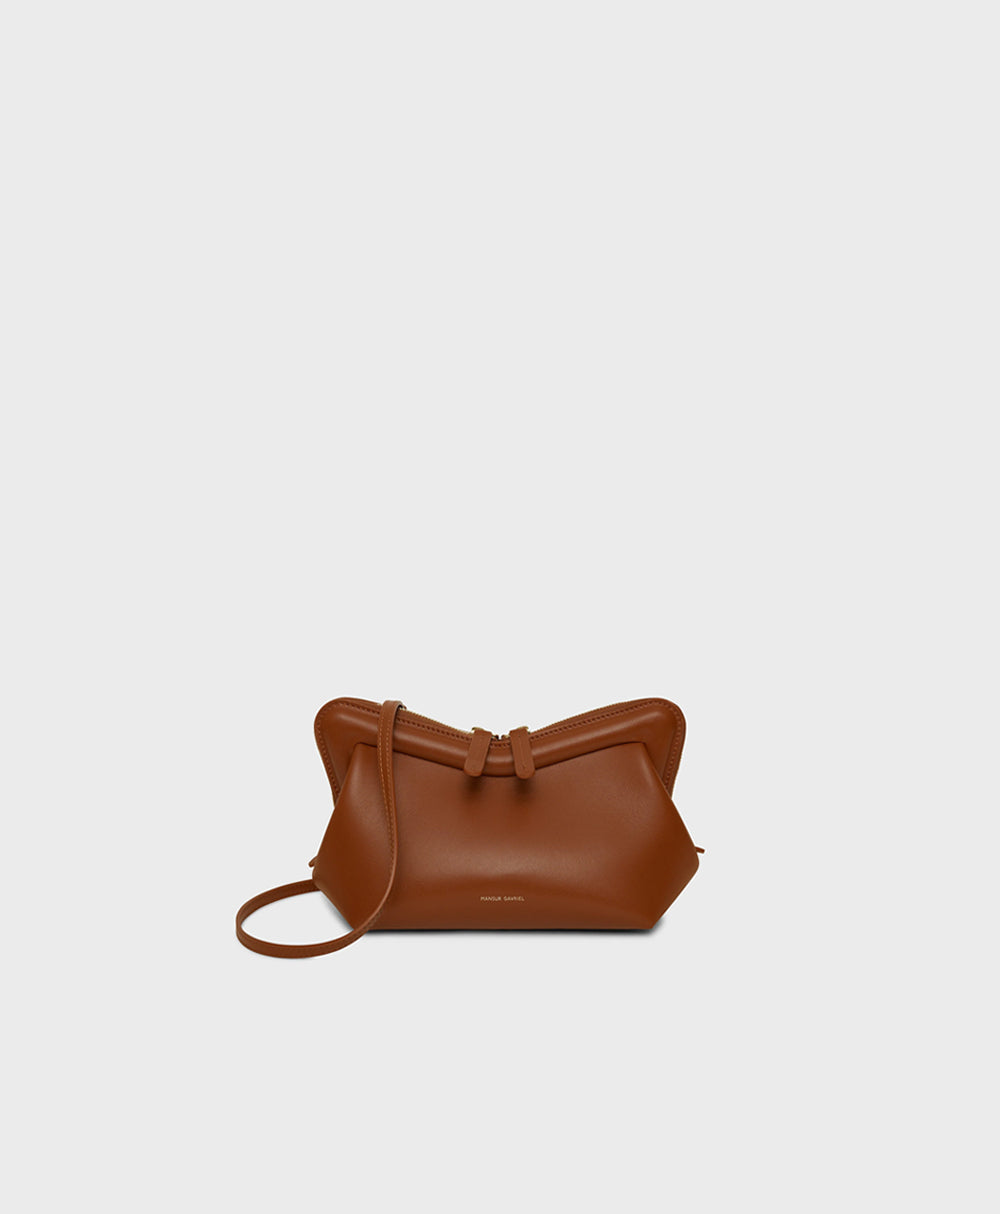 Mansur Gavriel Mini M Frame Leather Bag